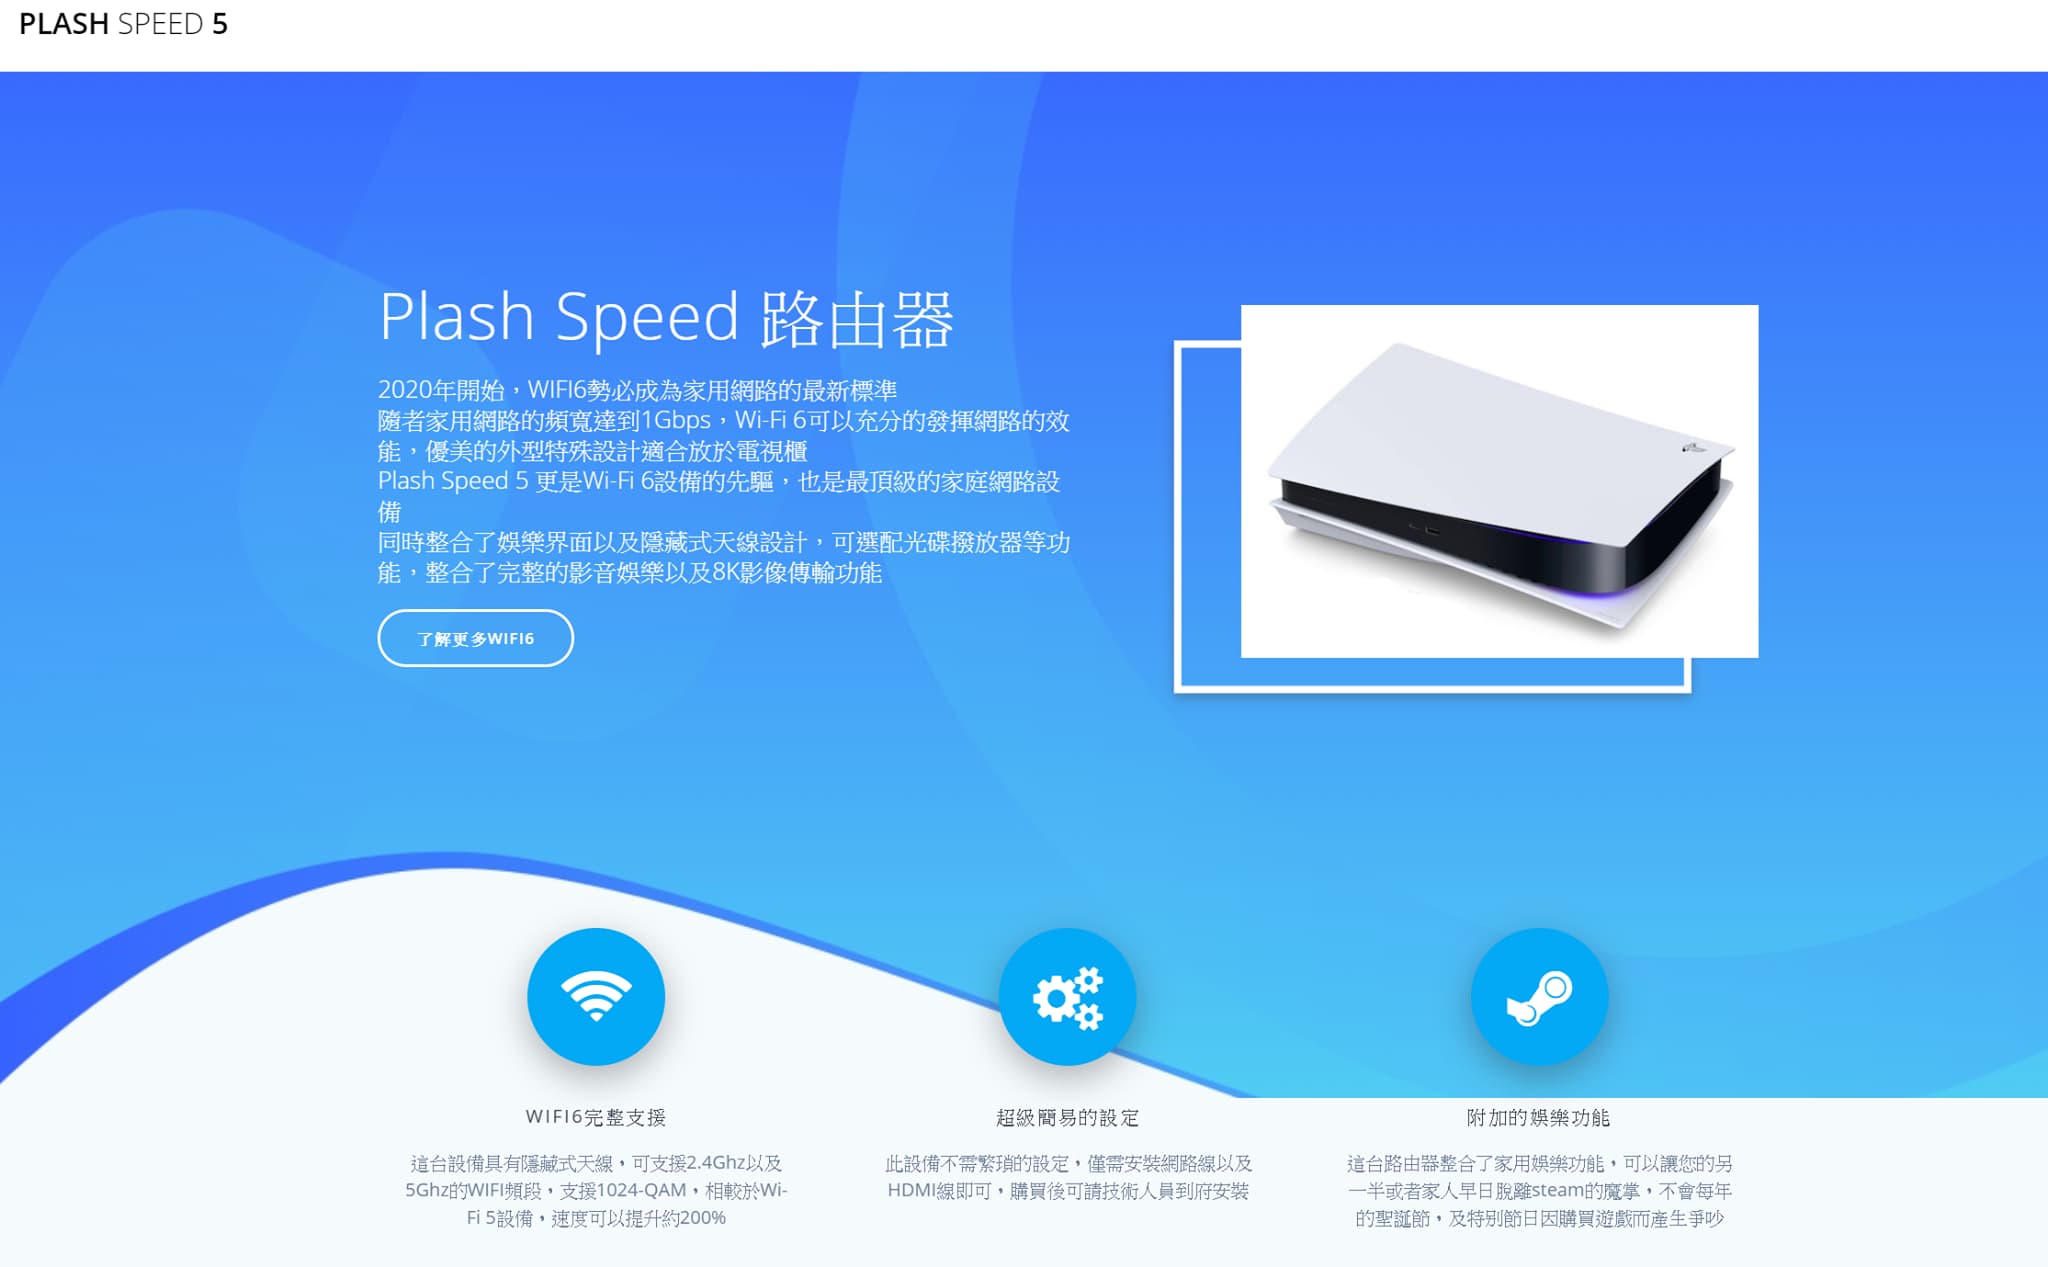 PLASH SPEED 5 是「Wi-Fi 6設備的先驅，也是最頂級的家庭網路設備」XD